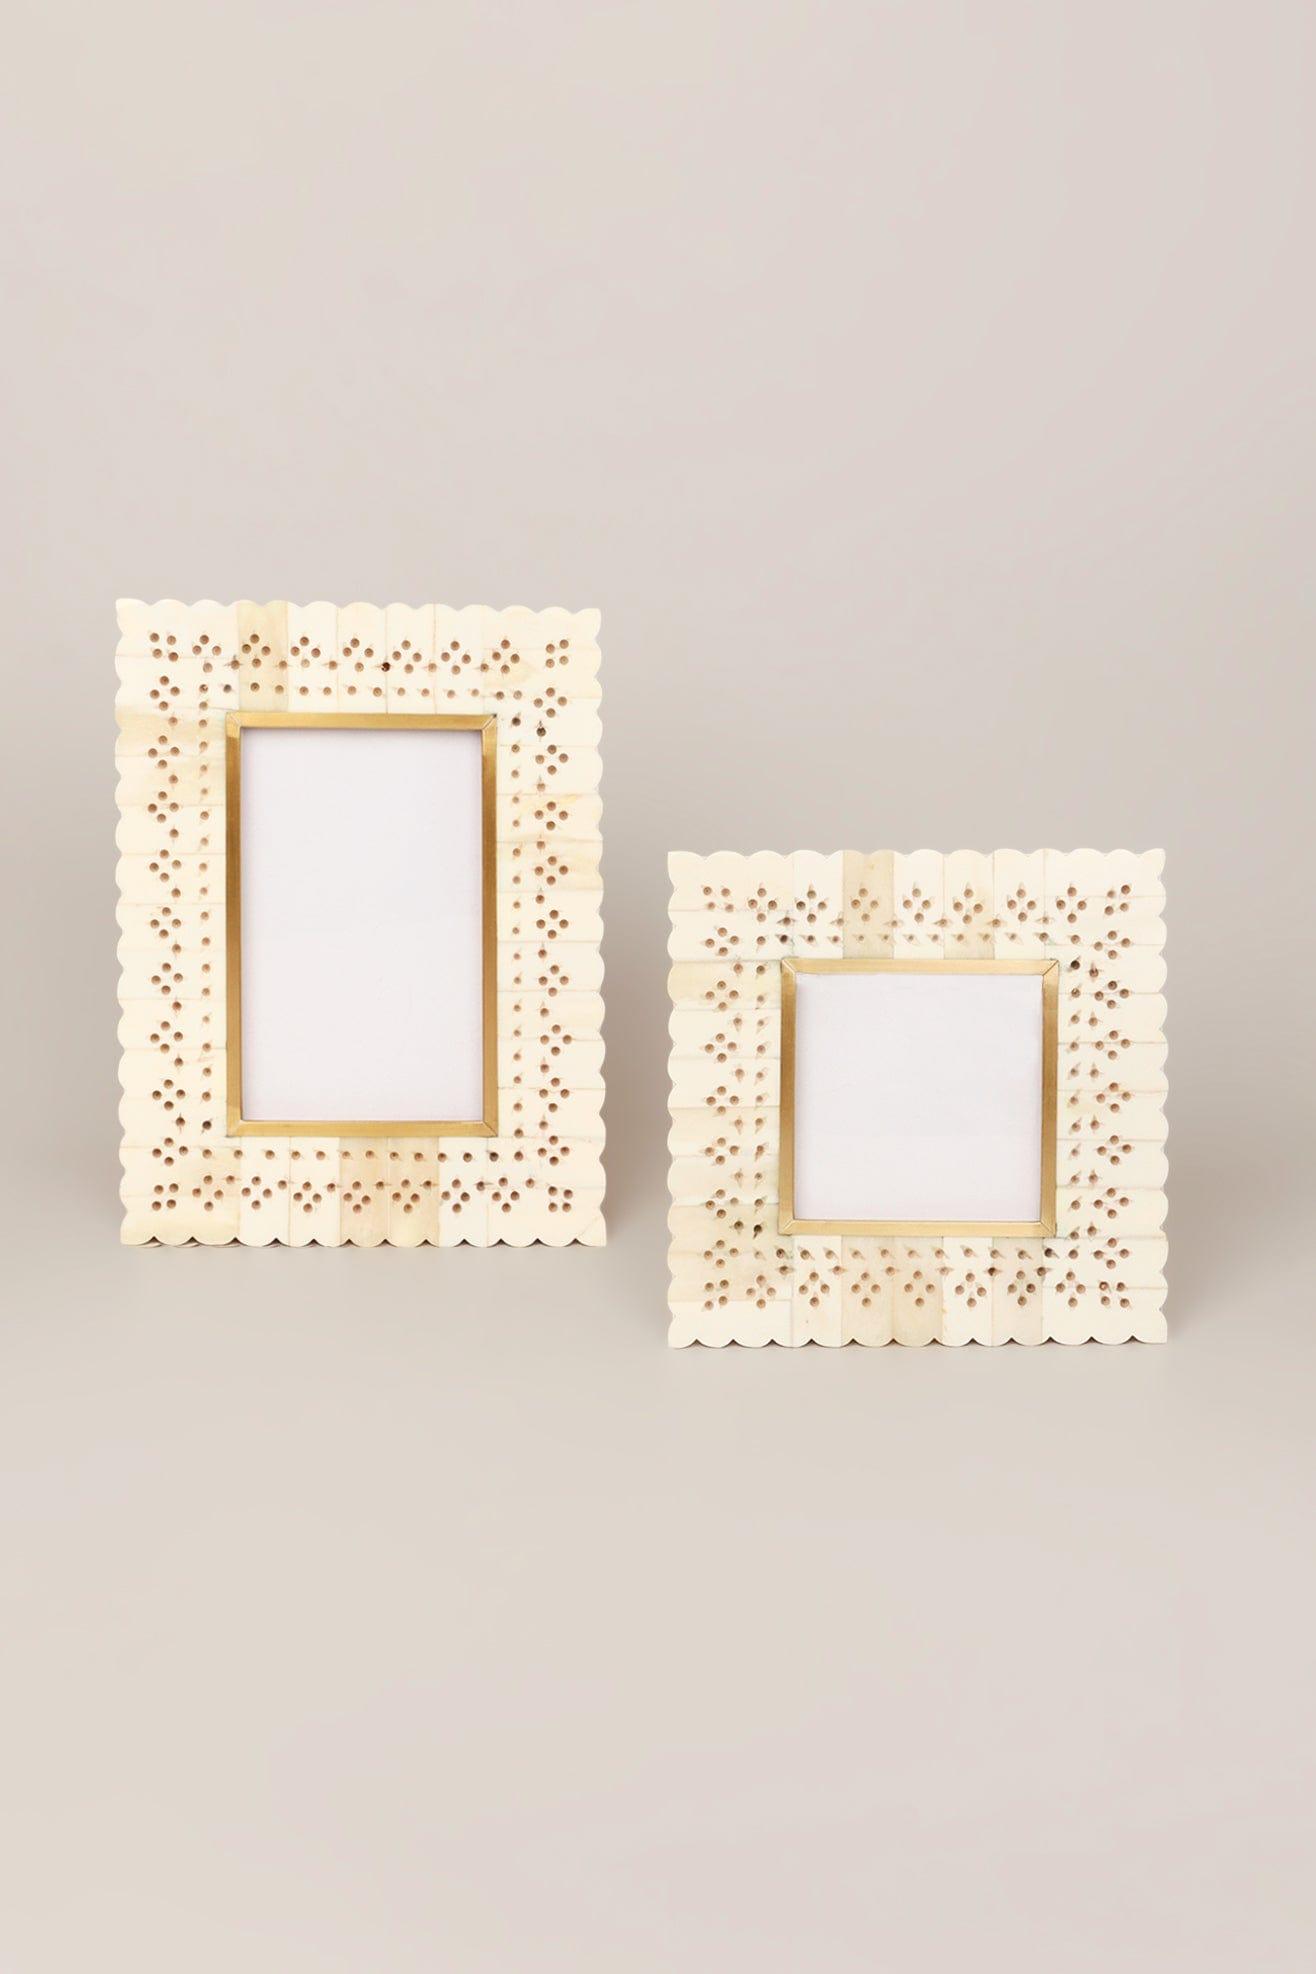 G Decor Picture frames Wooden Craft Art Stylish Photo Frames